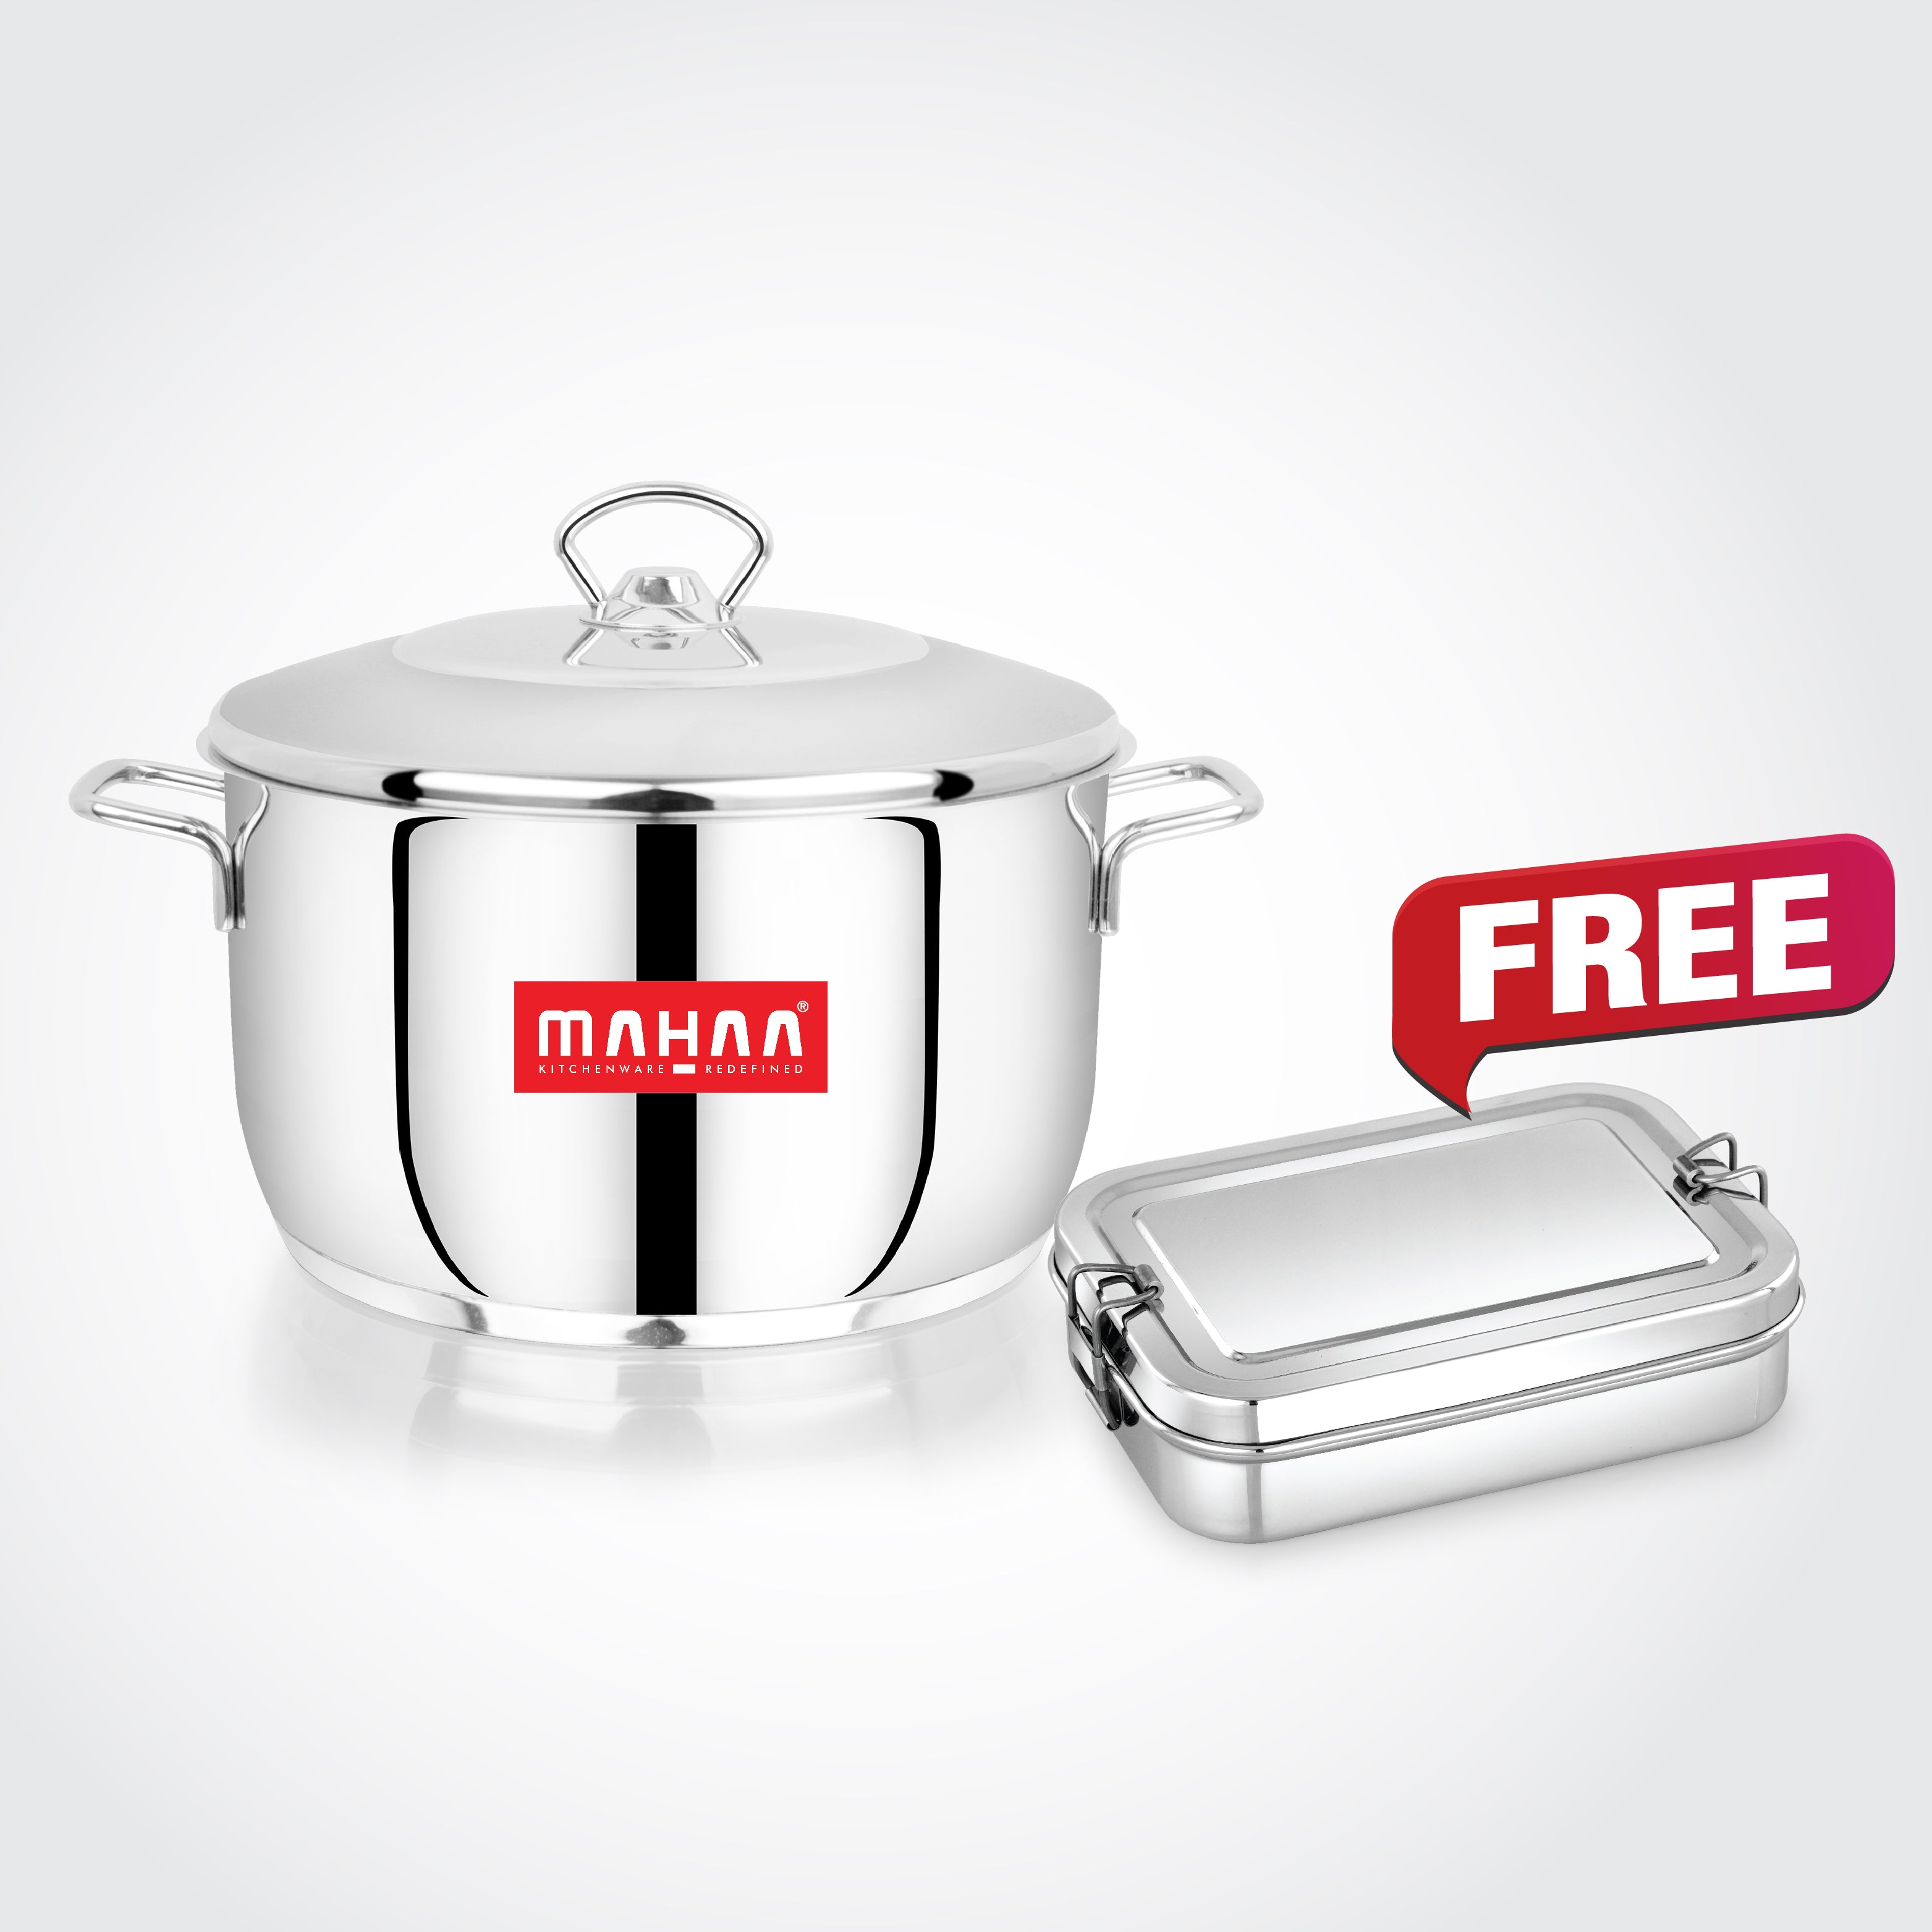 Mahaa offers #5: Buy Avanti cooking Pot 30cm & Get Lexa Lunch box FREE